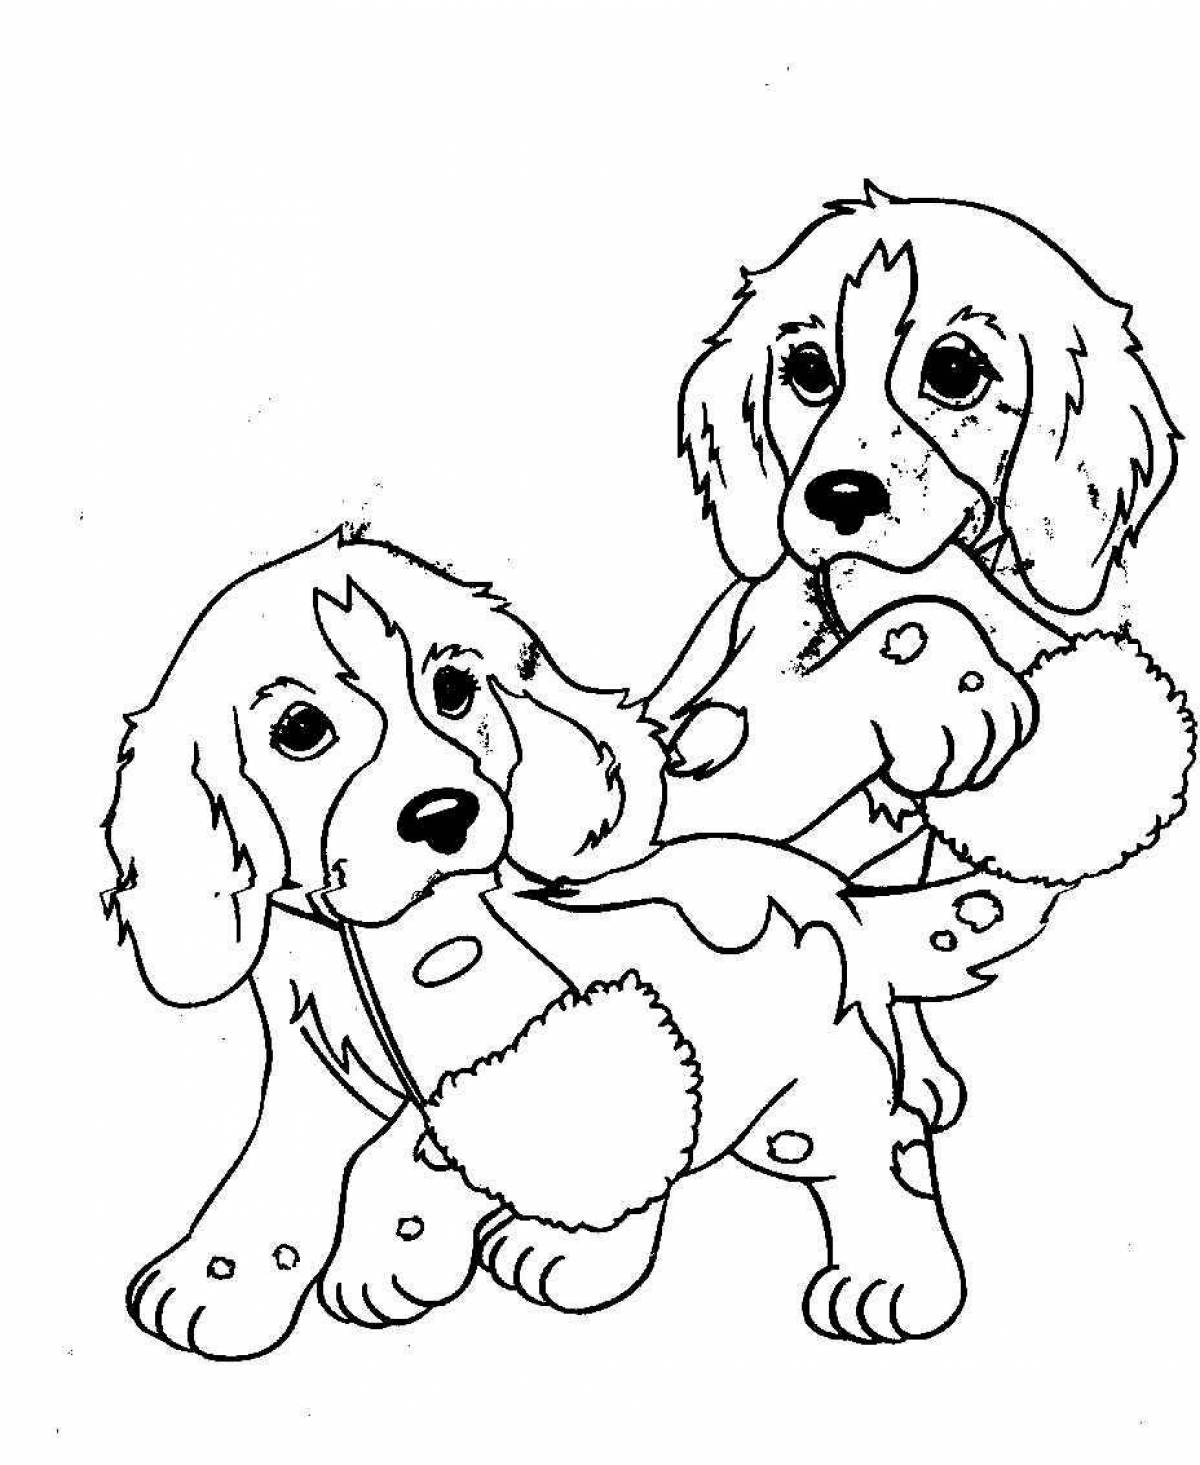 Joyful dog coloring book for kids